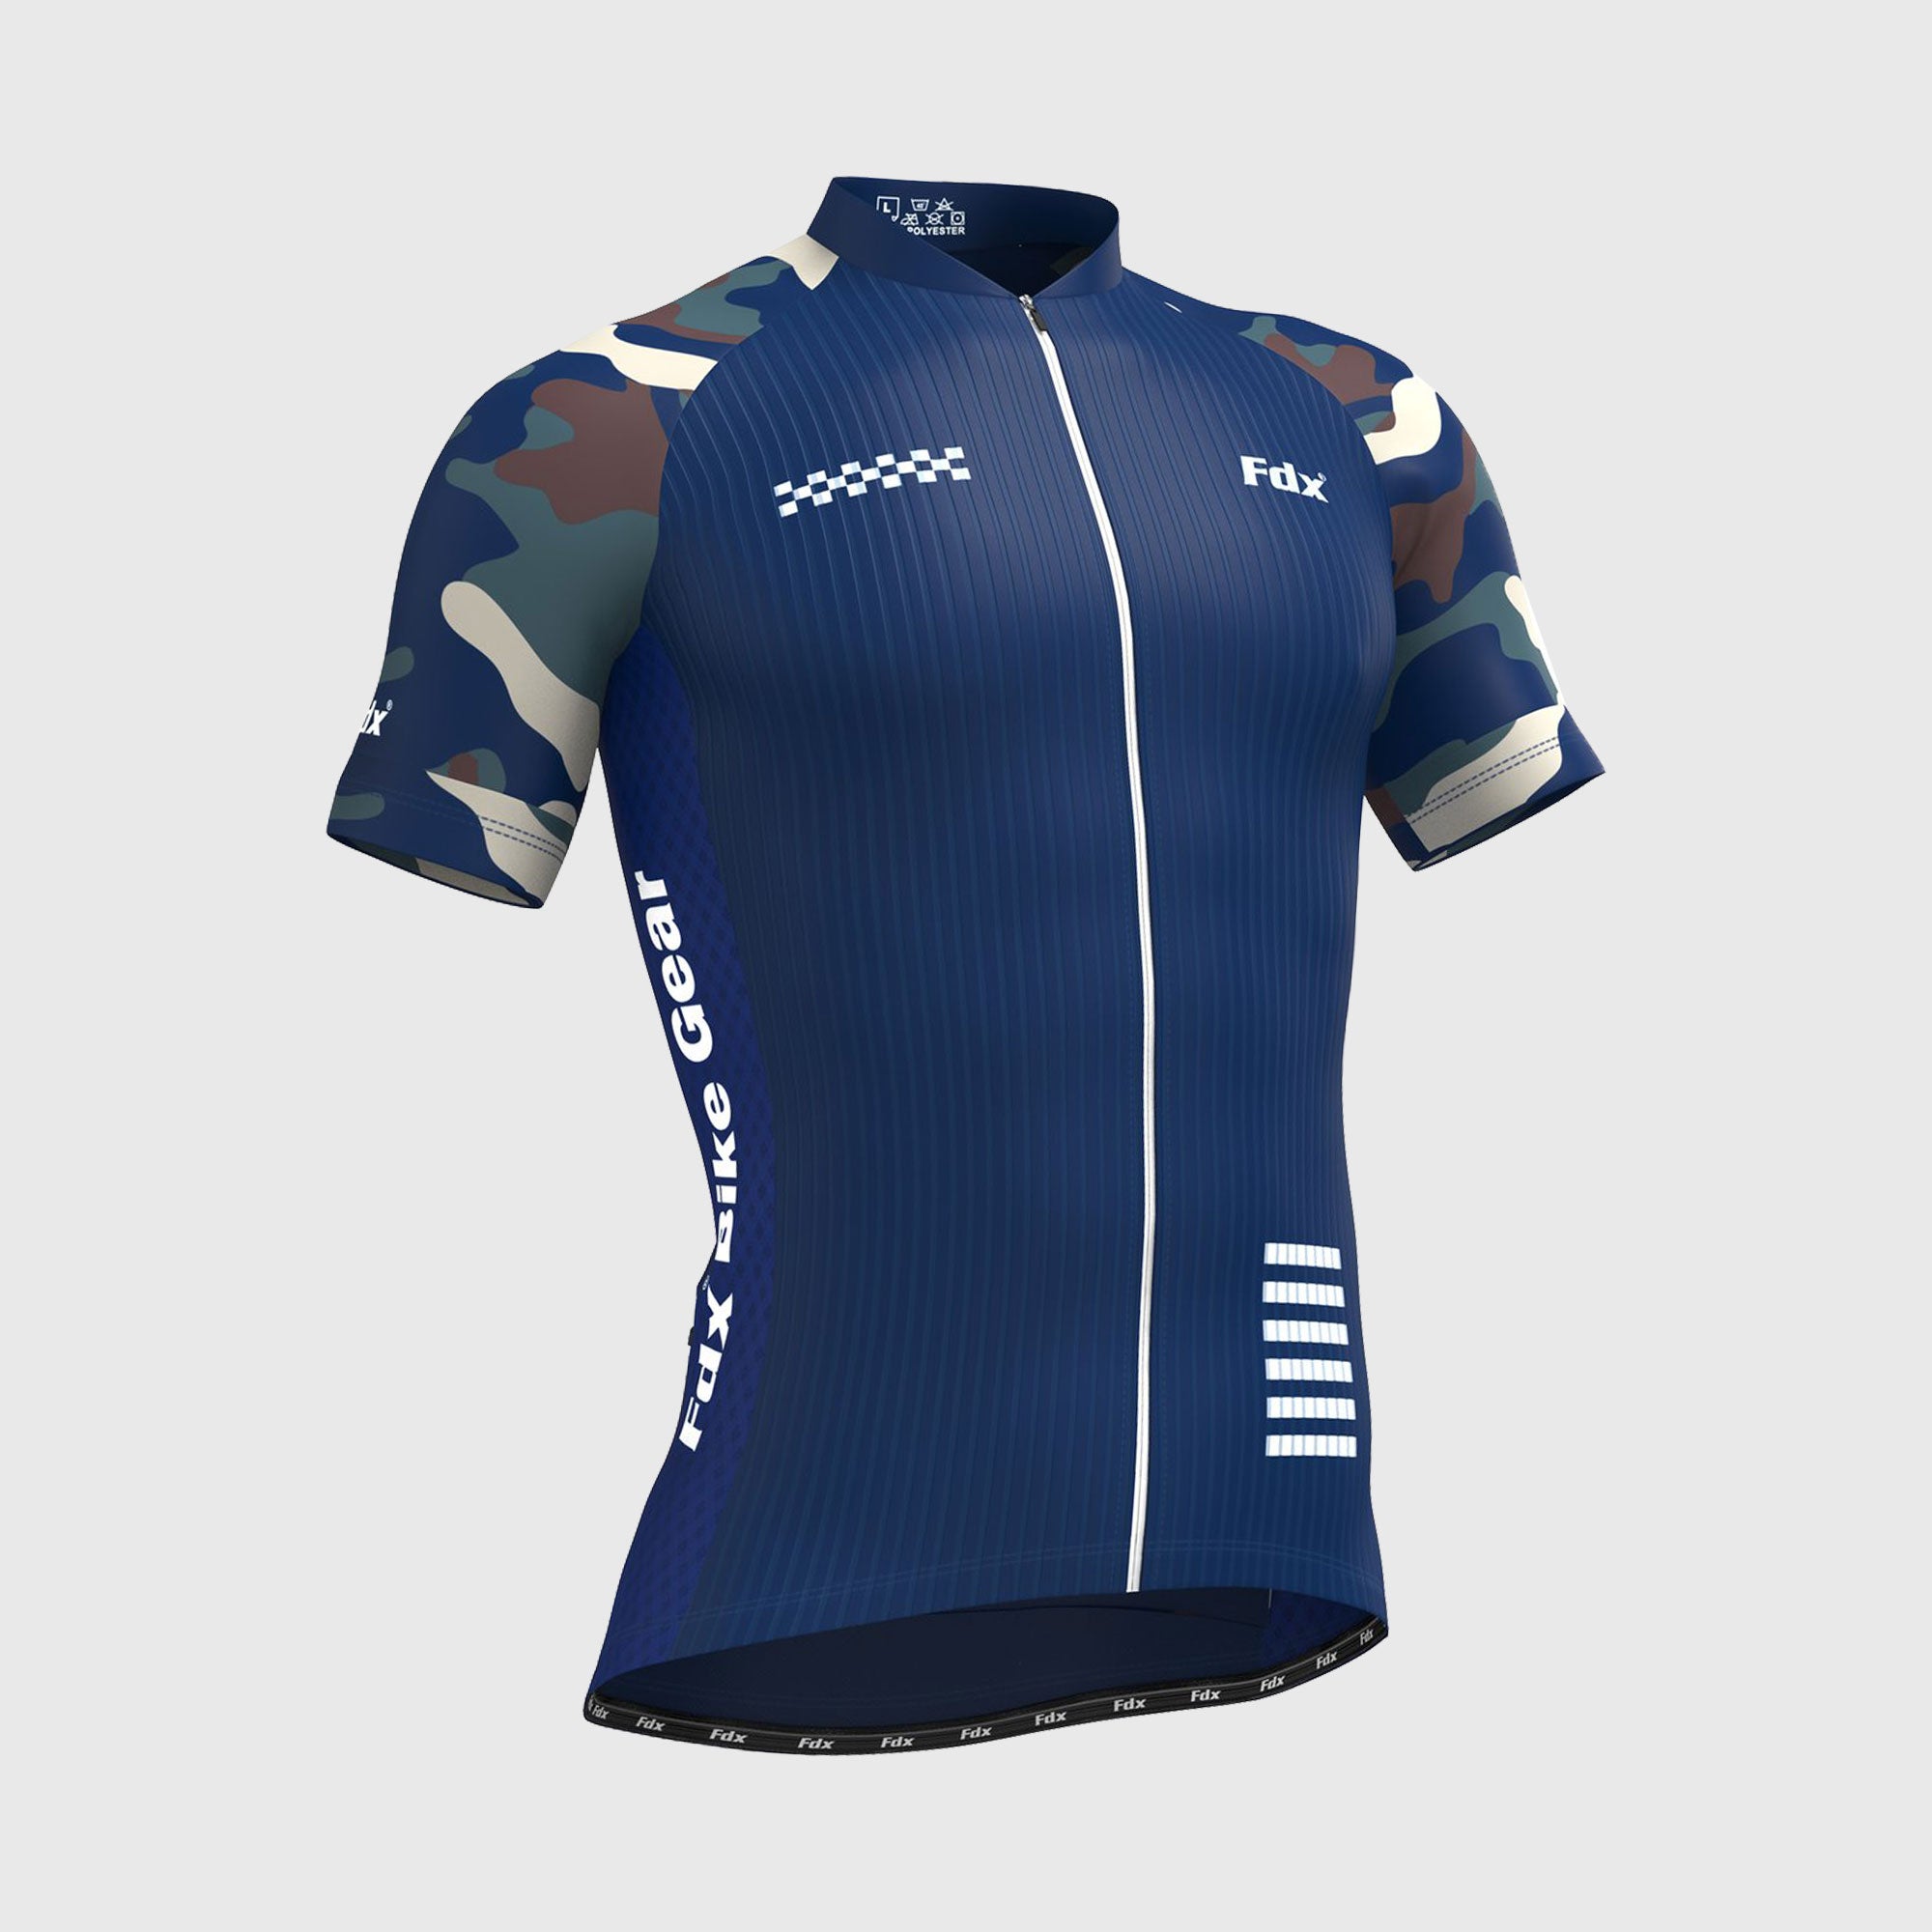 Fdx Mens Navy Blue Short Sleeve Cycling Jersey for Summer Best Road Bike Wear Top Light Weight, Full Zipper, Pockets & Hi-viz Reflectors - Camouflage